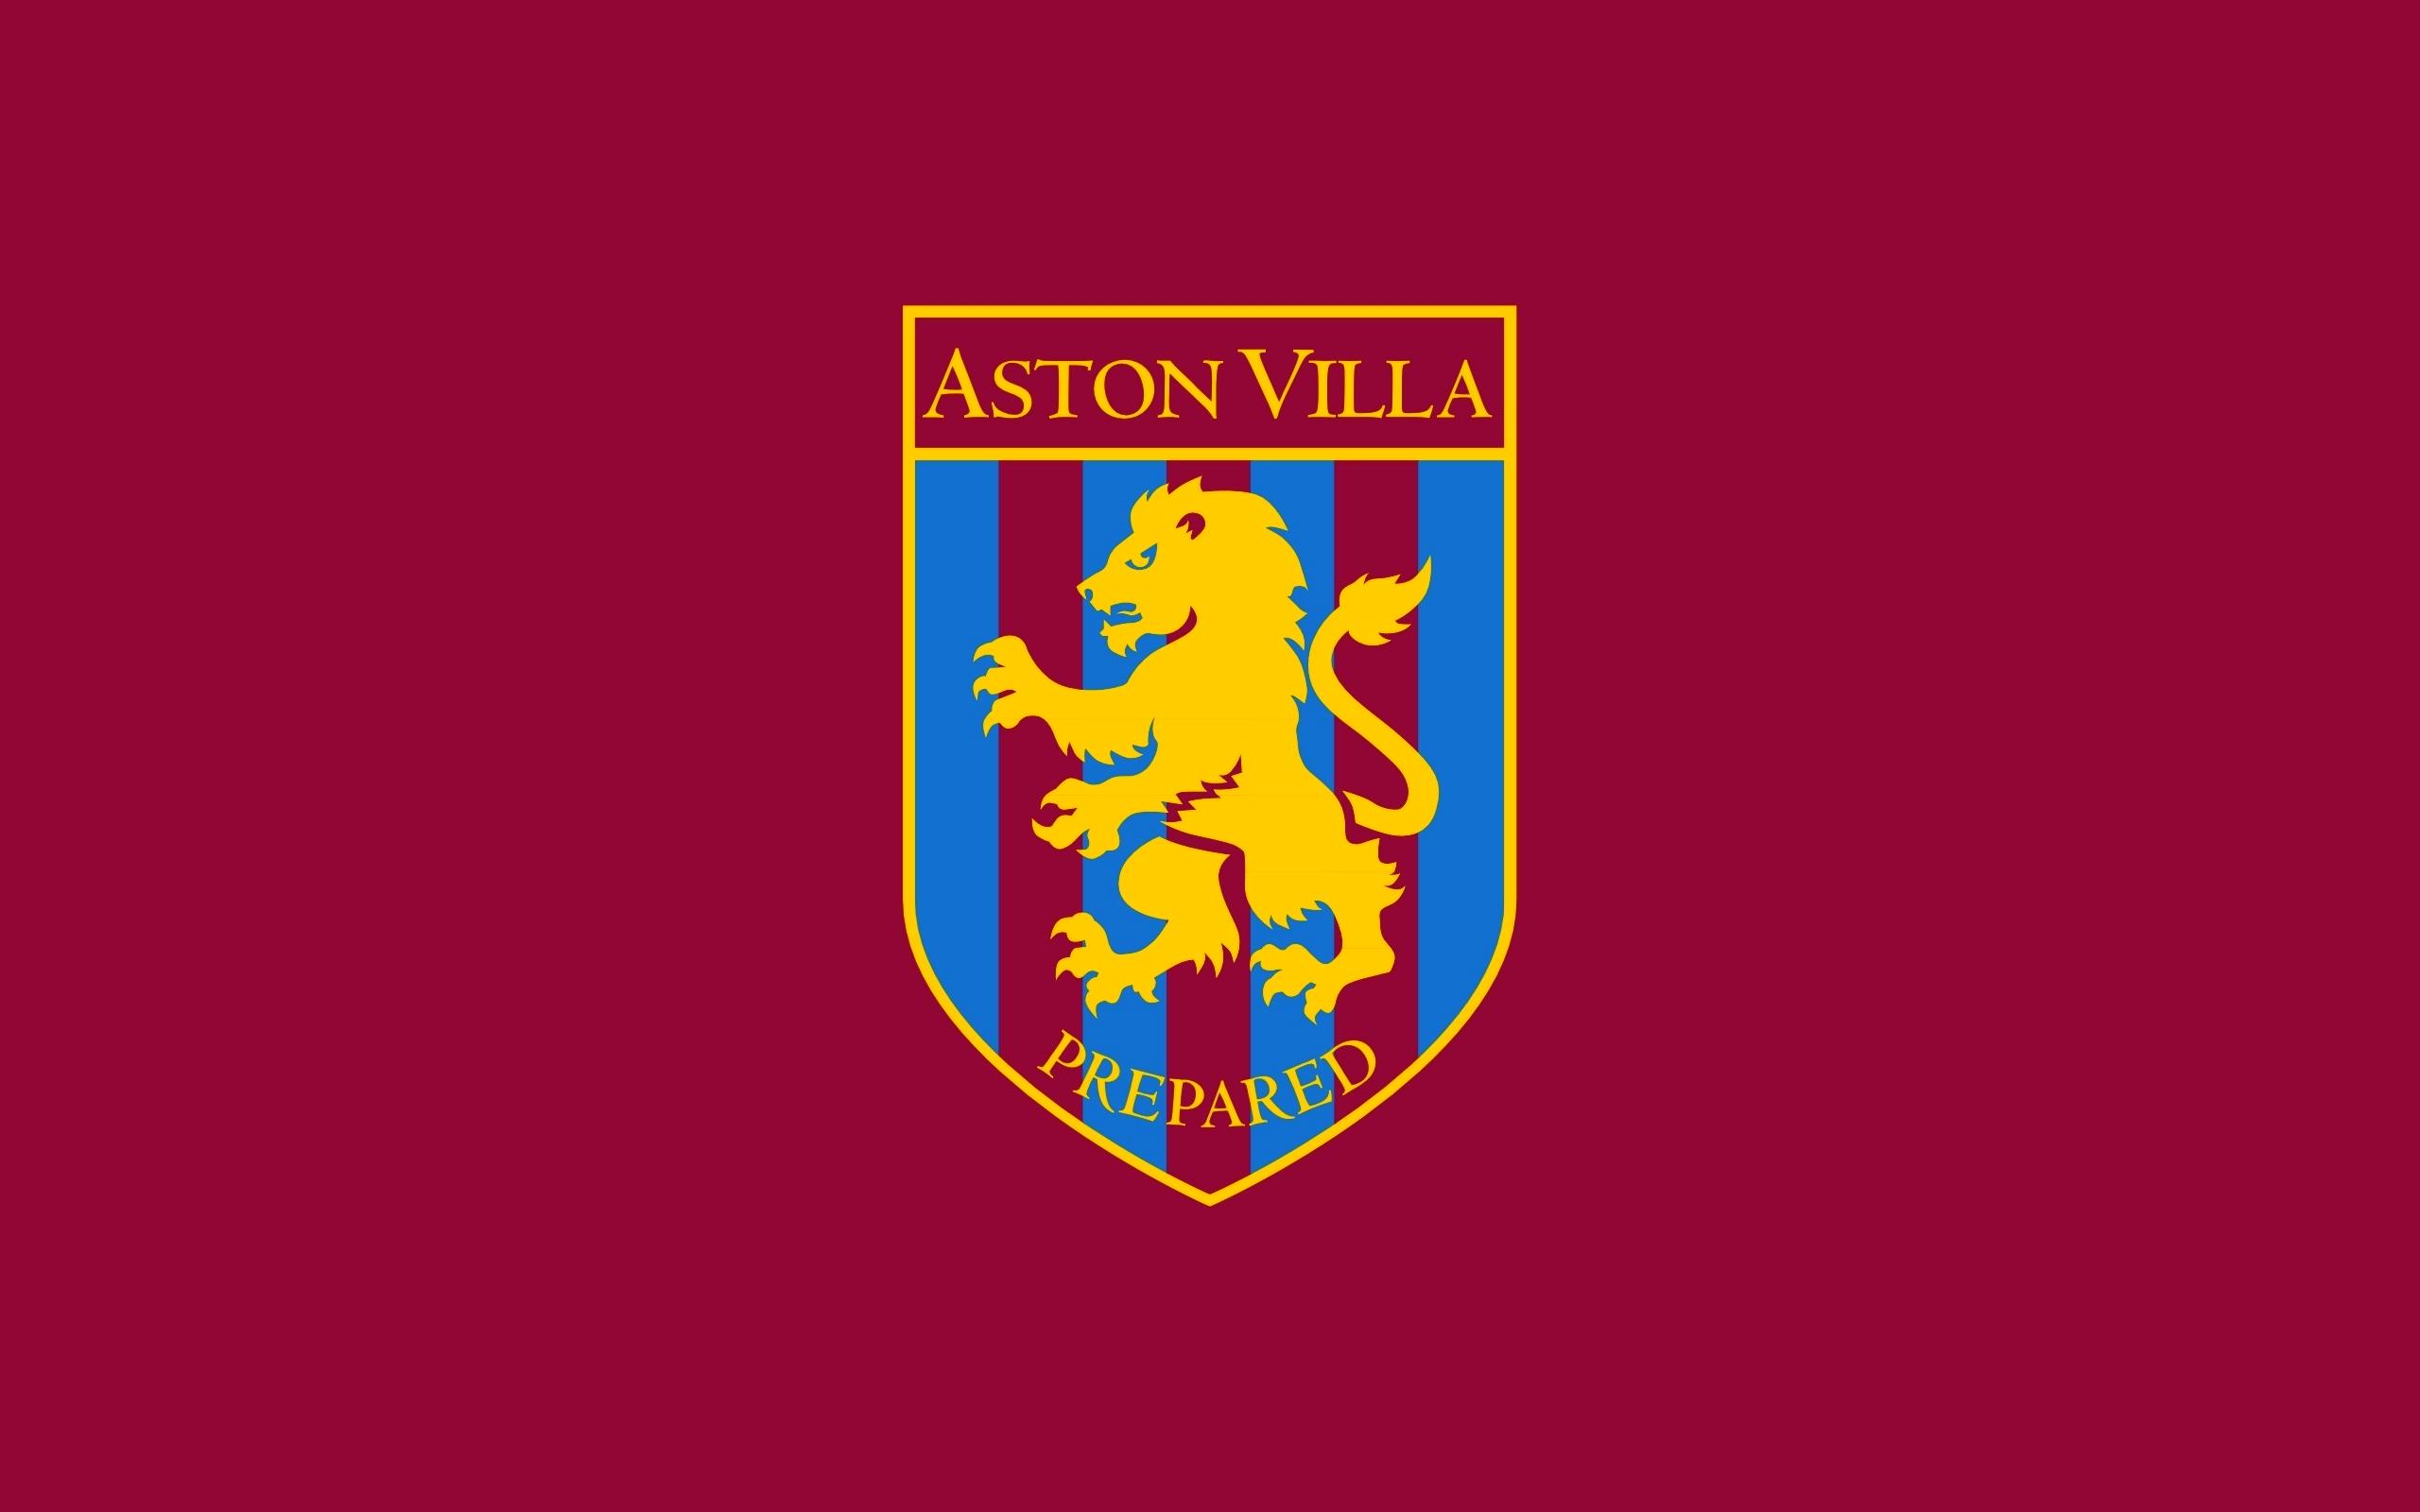 Aston Villa Prepared Primary logo t shirt iron on transfers